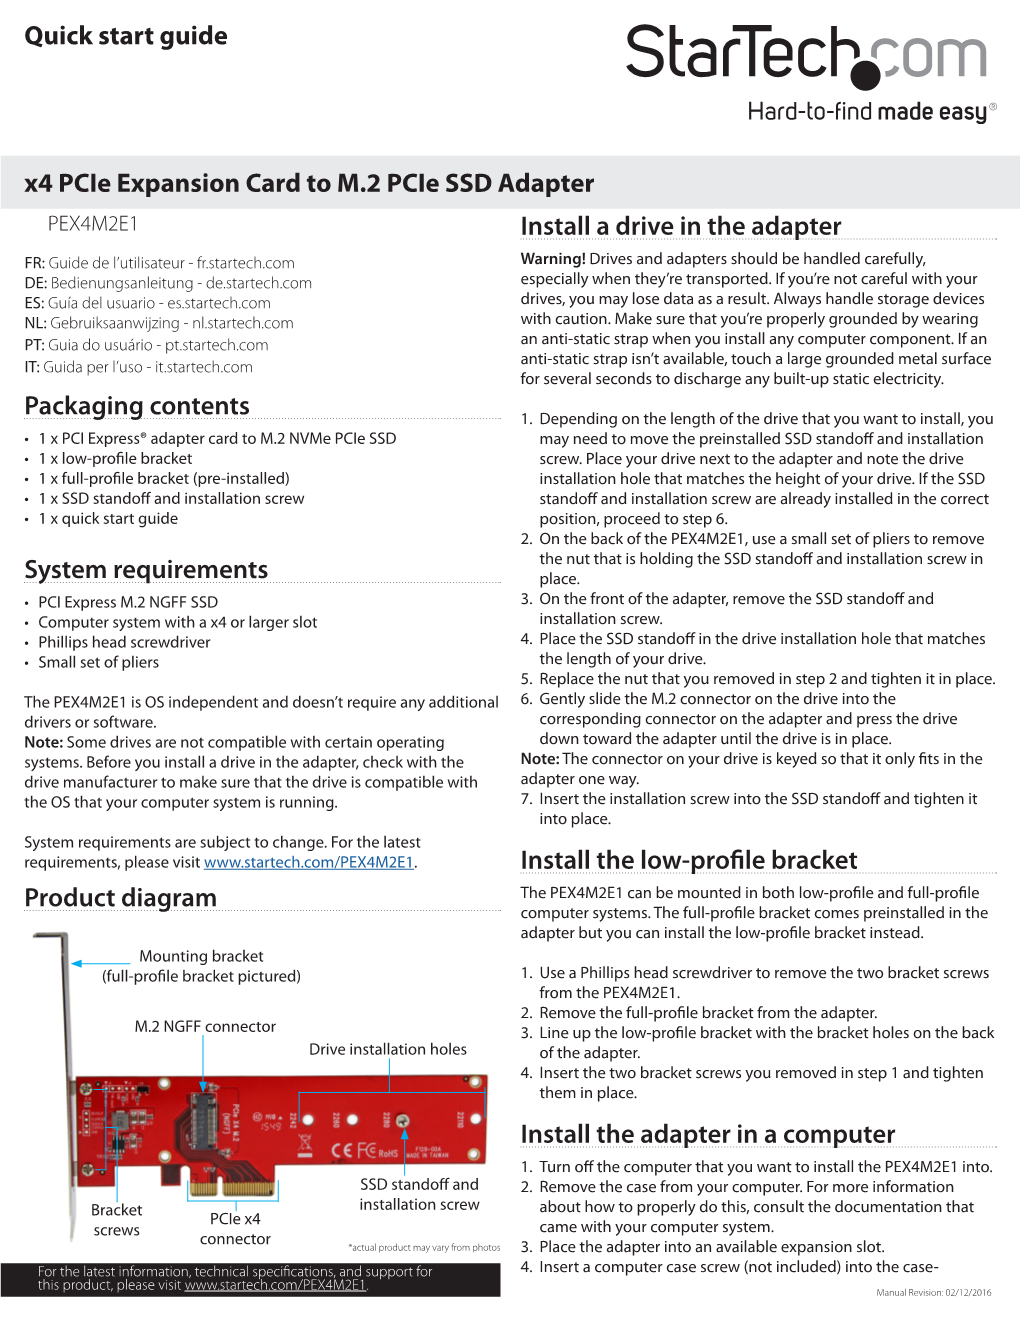 PEX4M2E1 Expansion Card Quick Start Guide